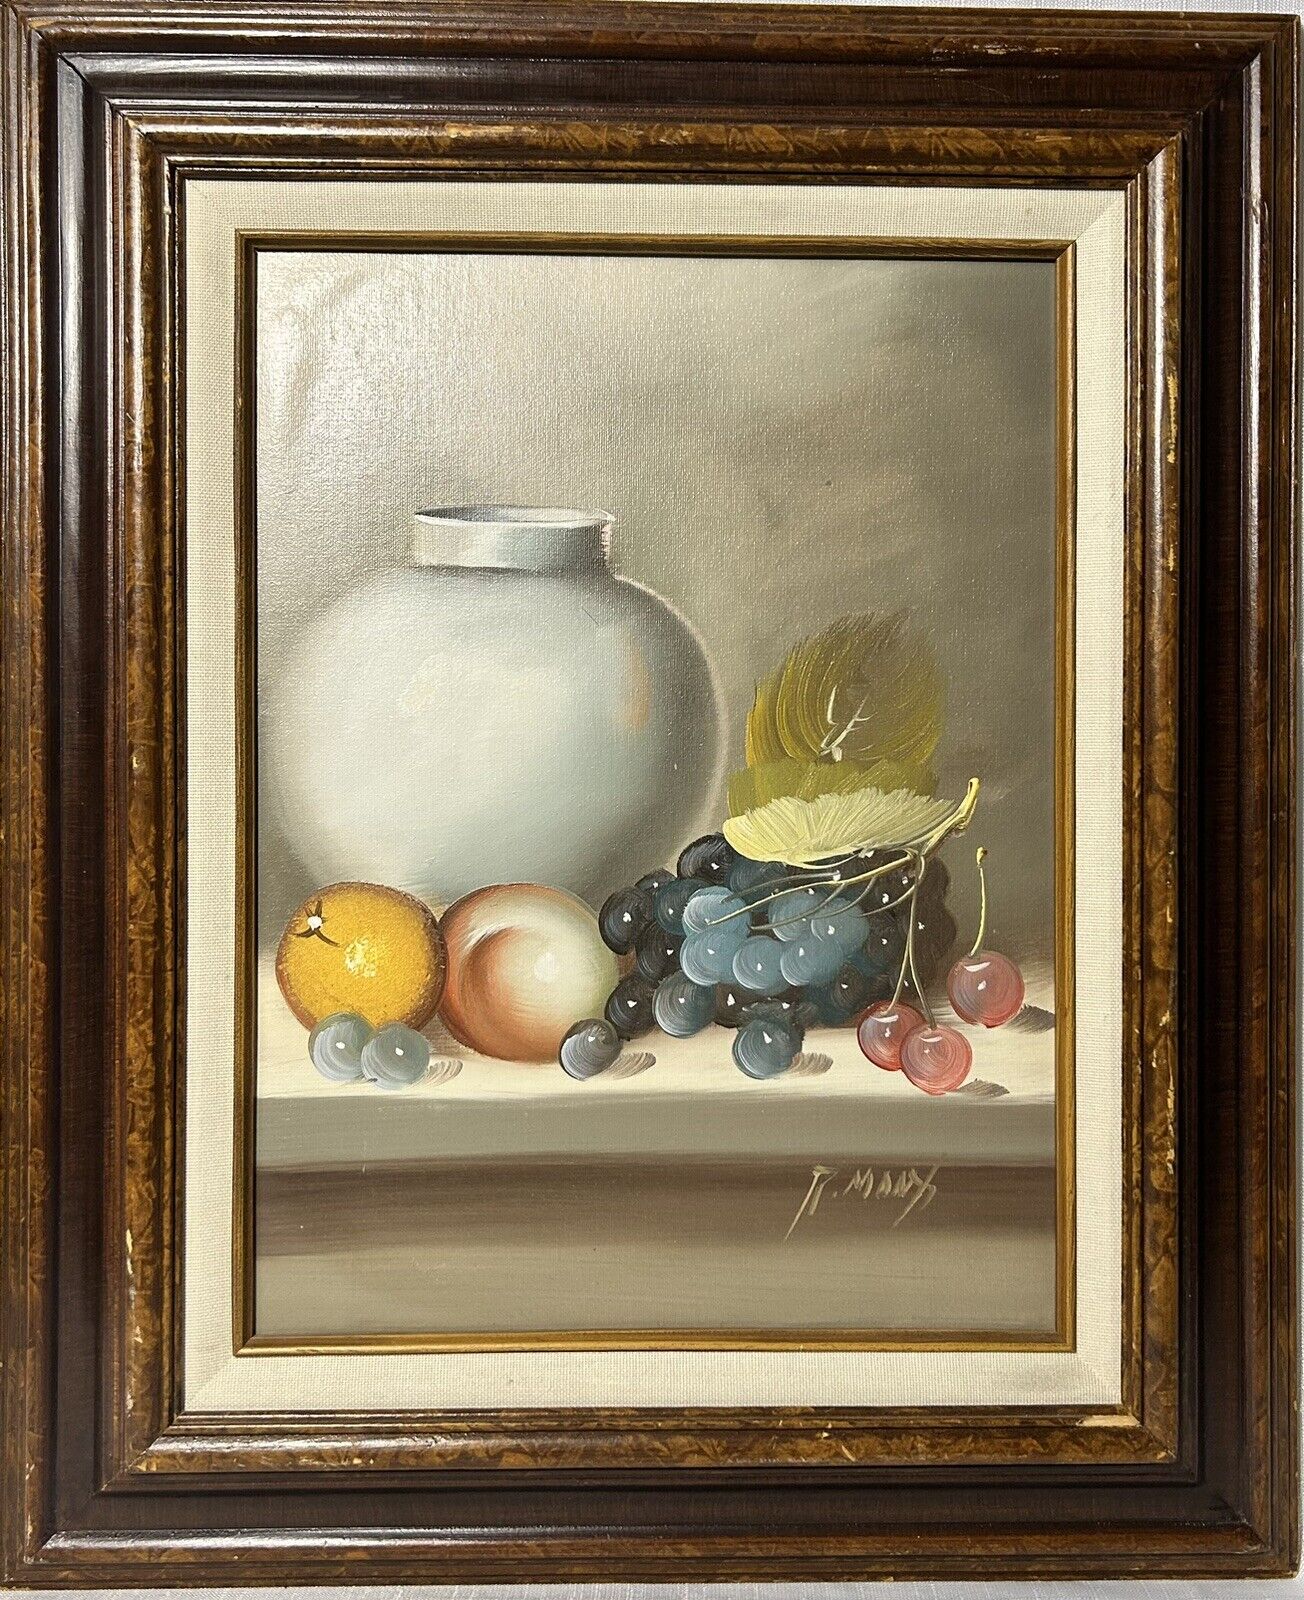 Stunning Original P. Yanna Fruit Wine Oil Painting on Canvas - Still Life Framed